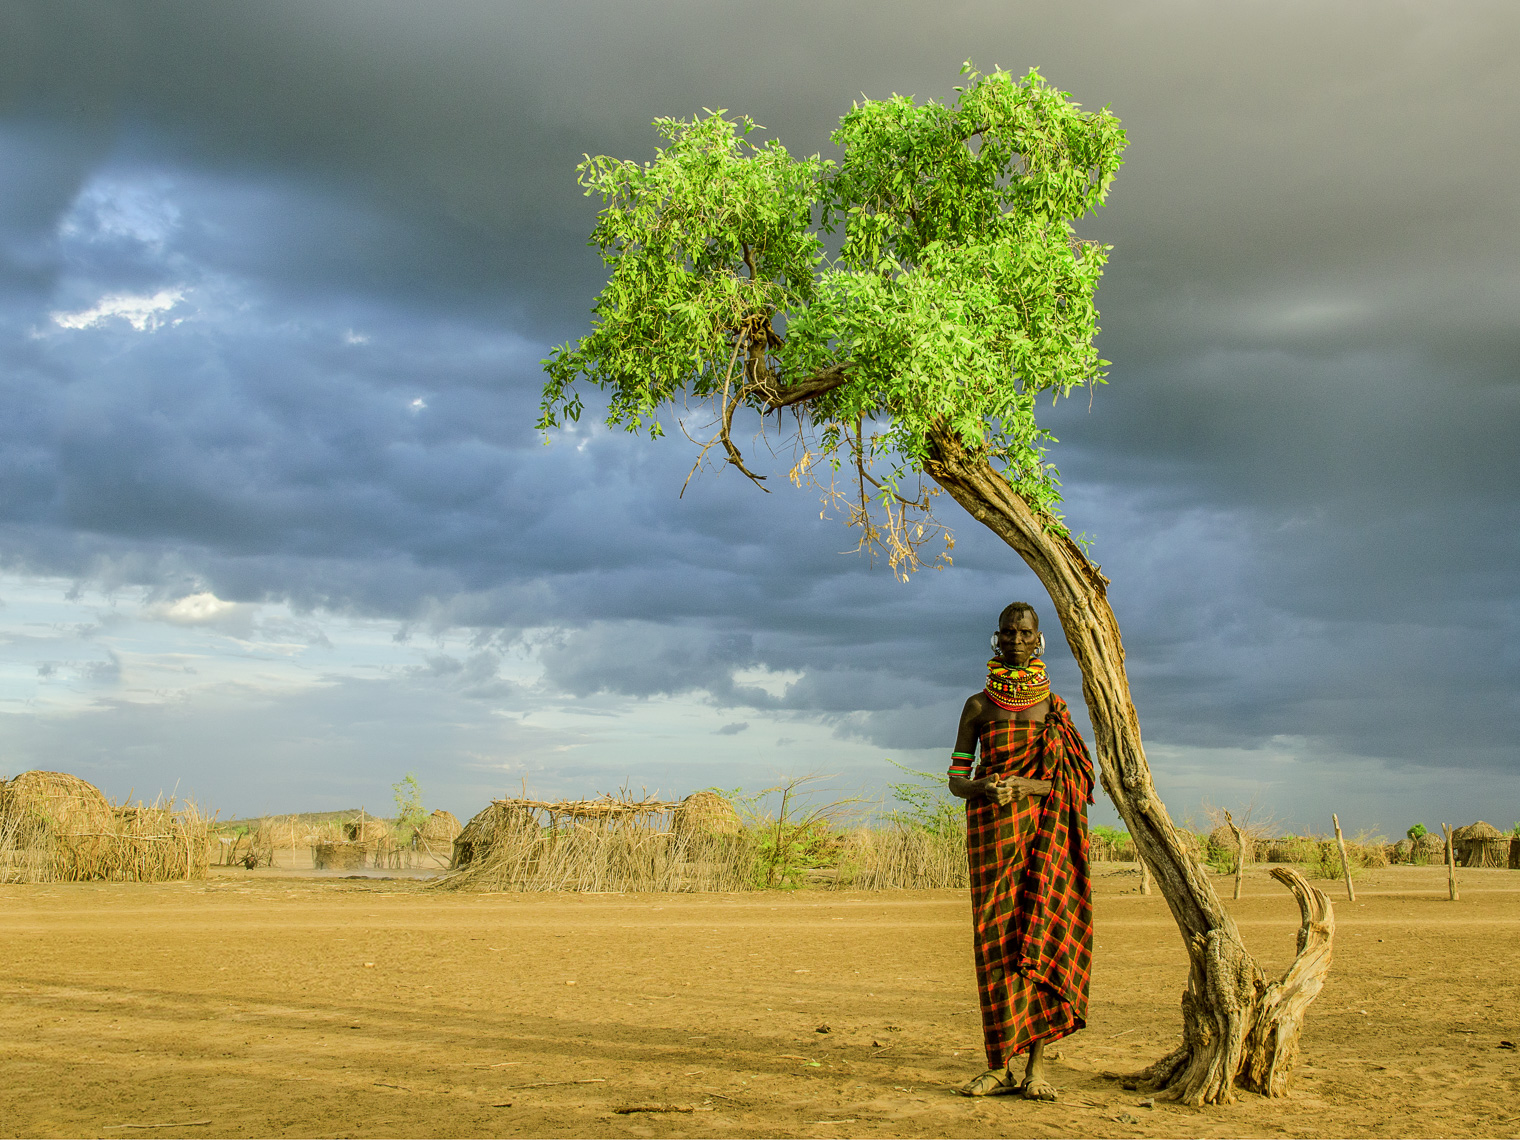 Turkana Woman by Tree, Kenya